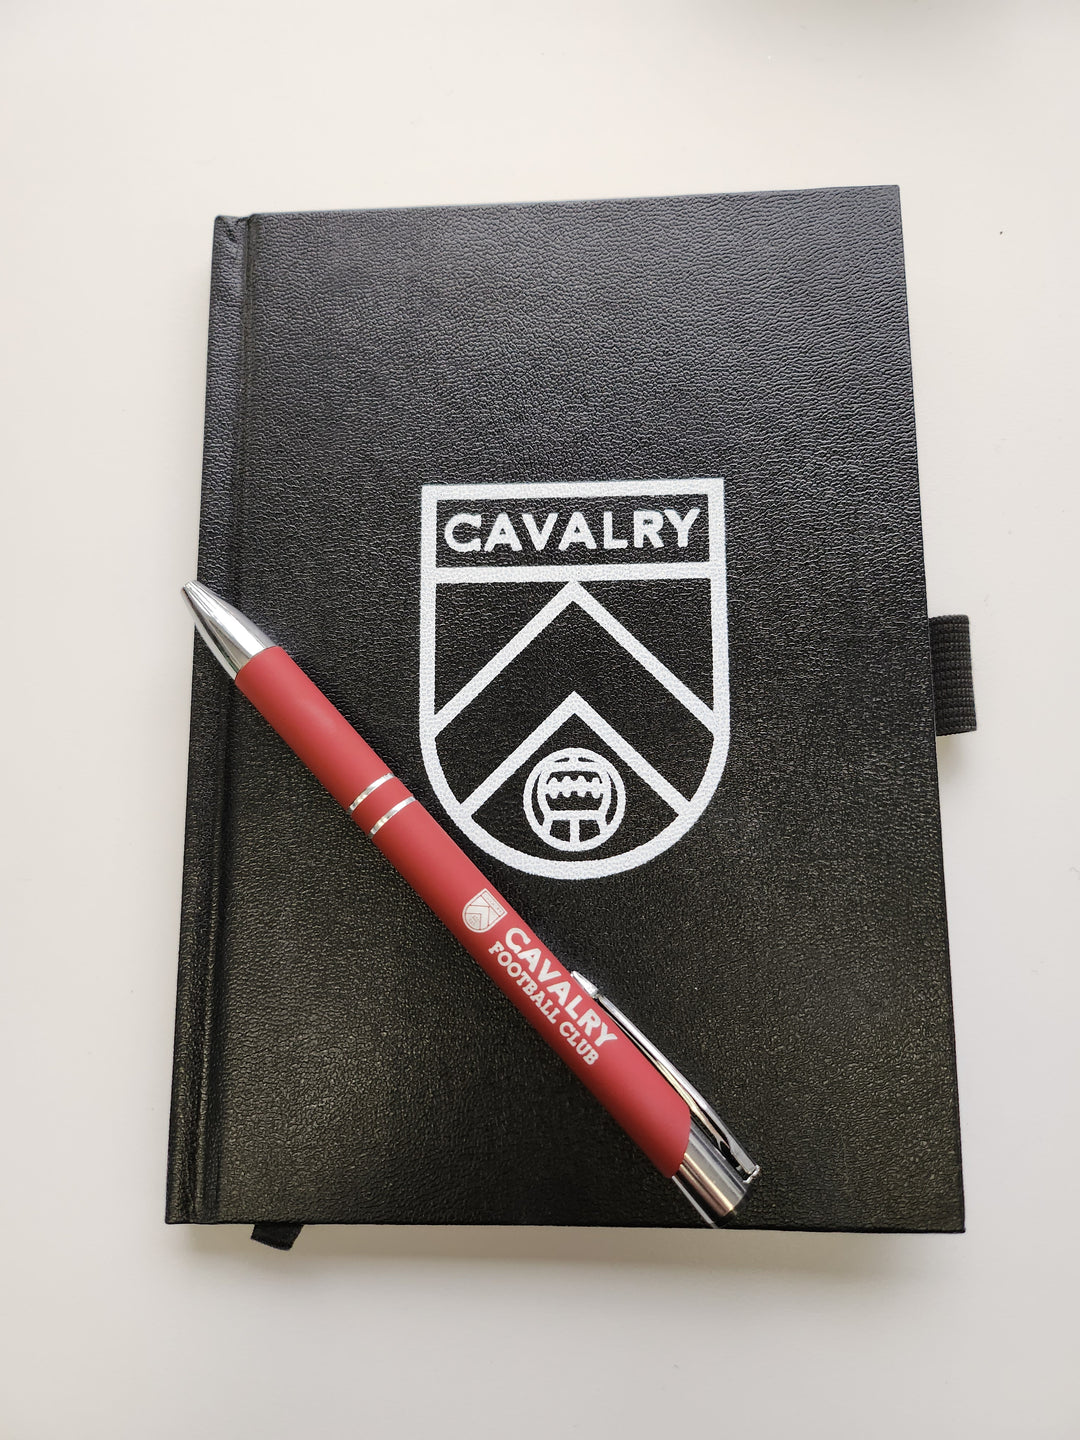 Cavalry FC Notebook & Pen